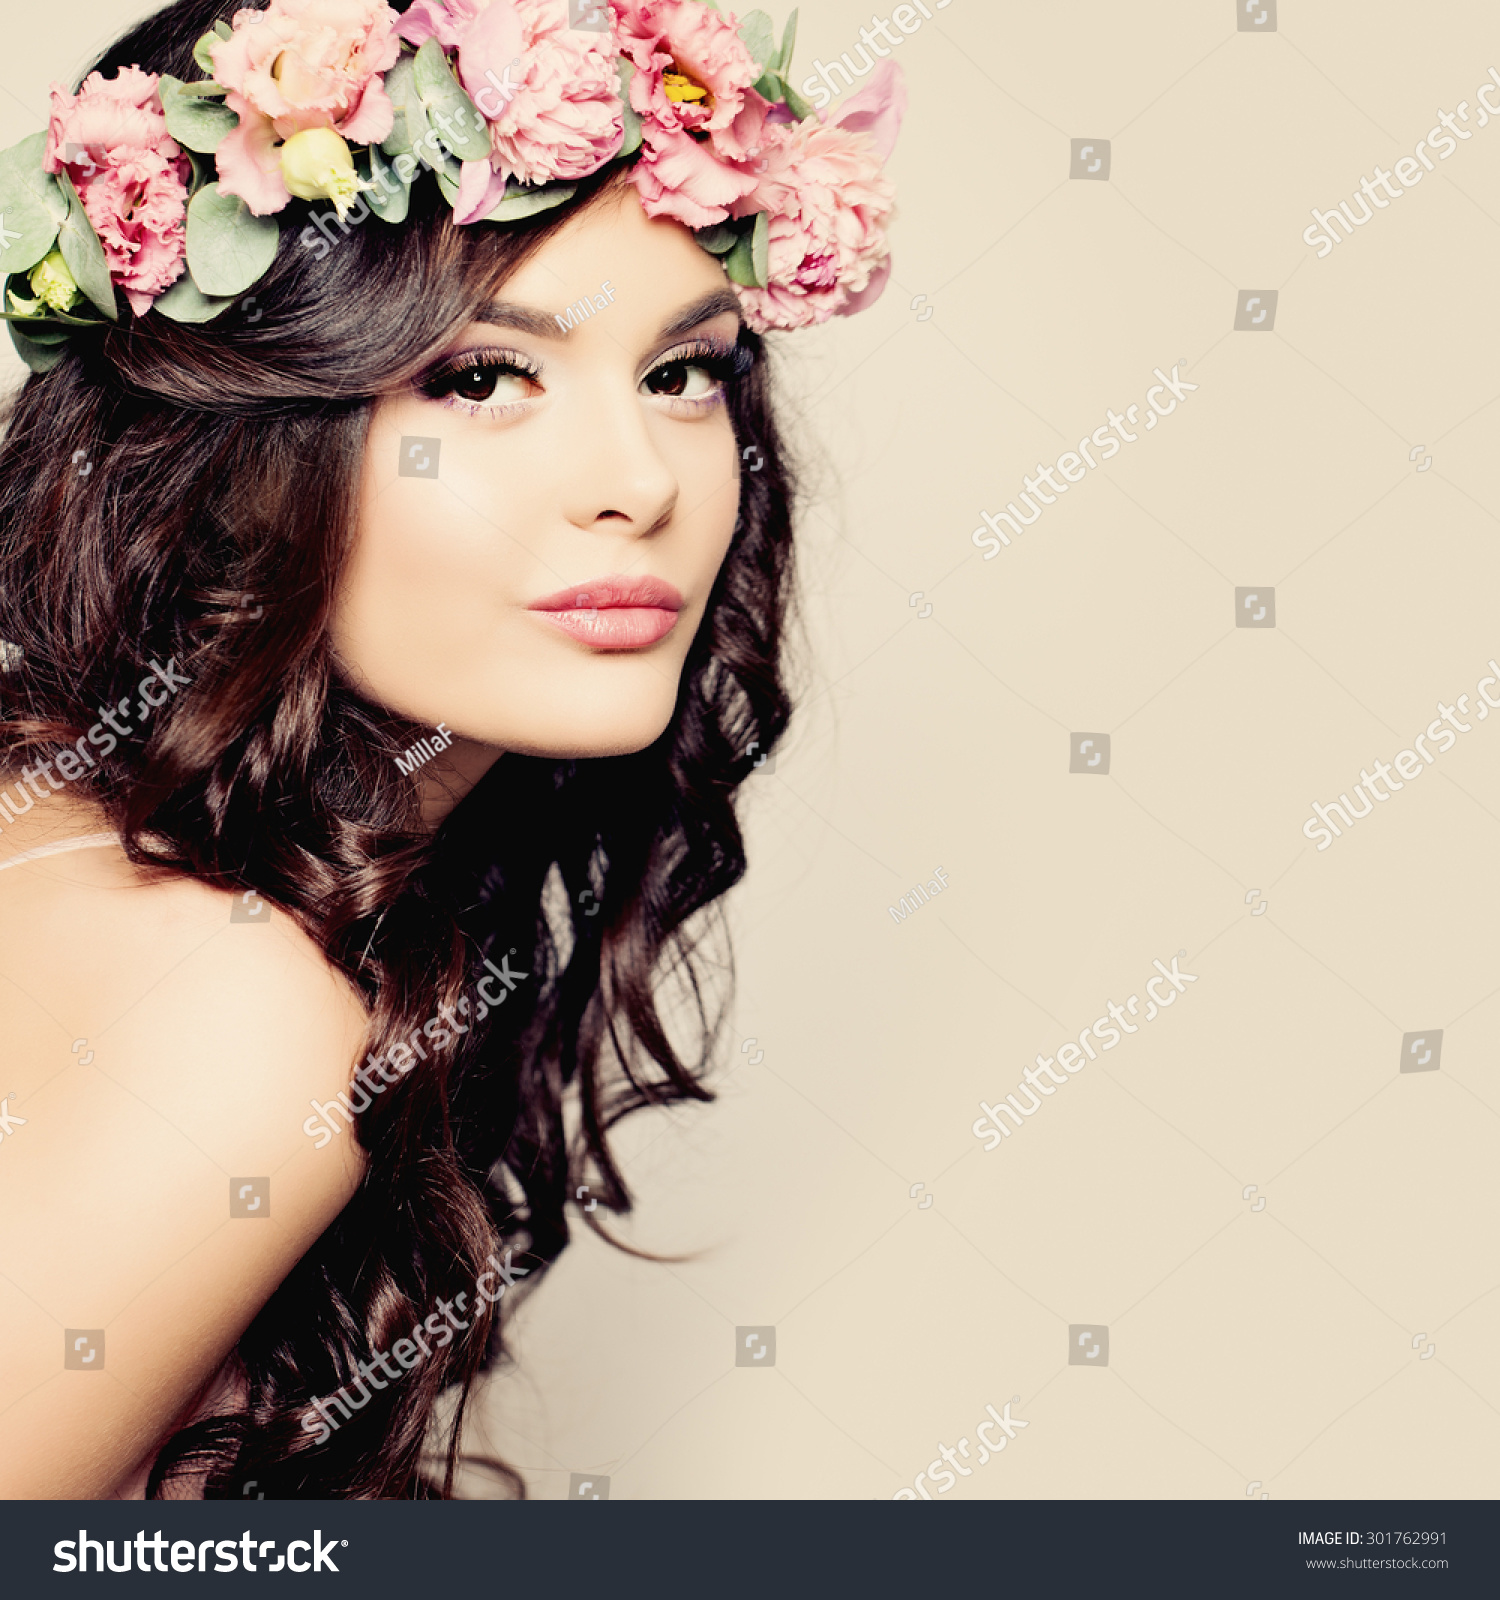 Beautiful Young Woman Summer Pink Flowers Stockfoto Jetzt